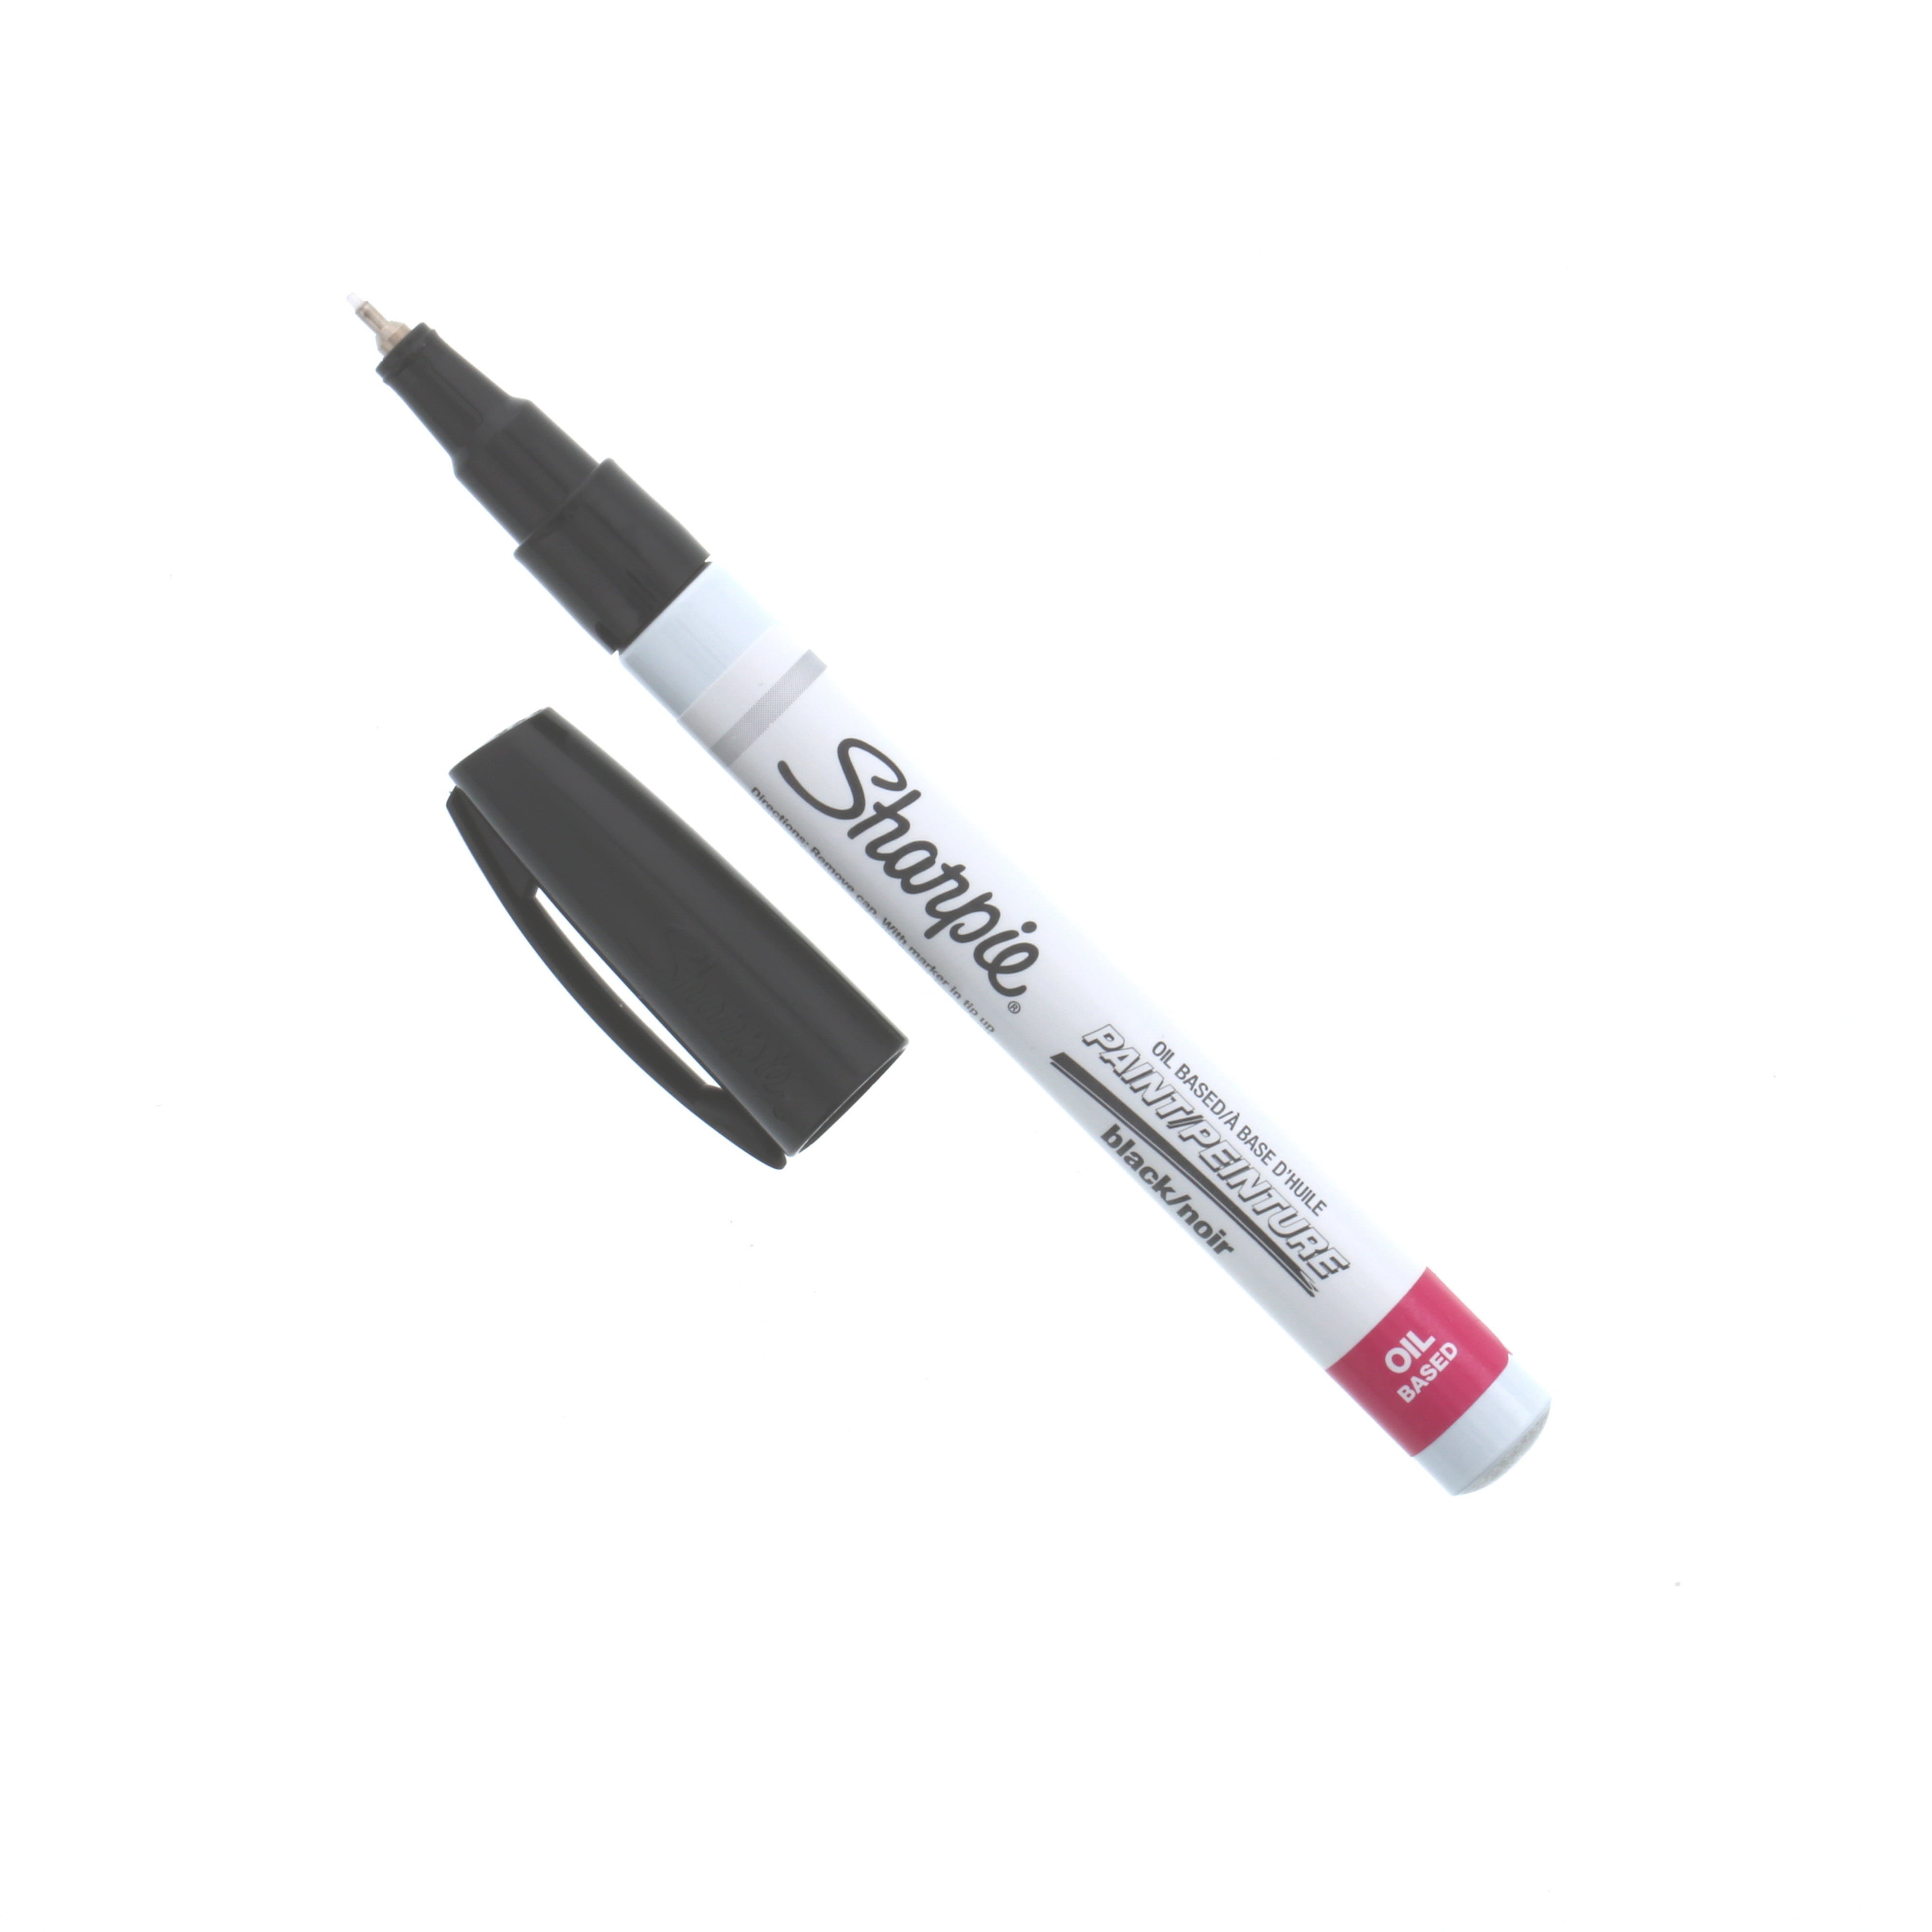 10 Pcs Black Oil Based Paint Marker Extra Fine Pen Type Two way Art Pens 